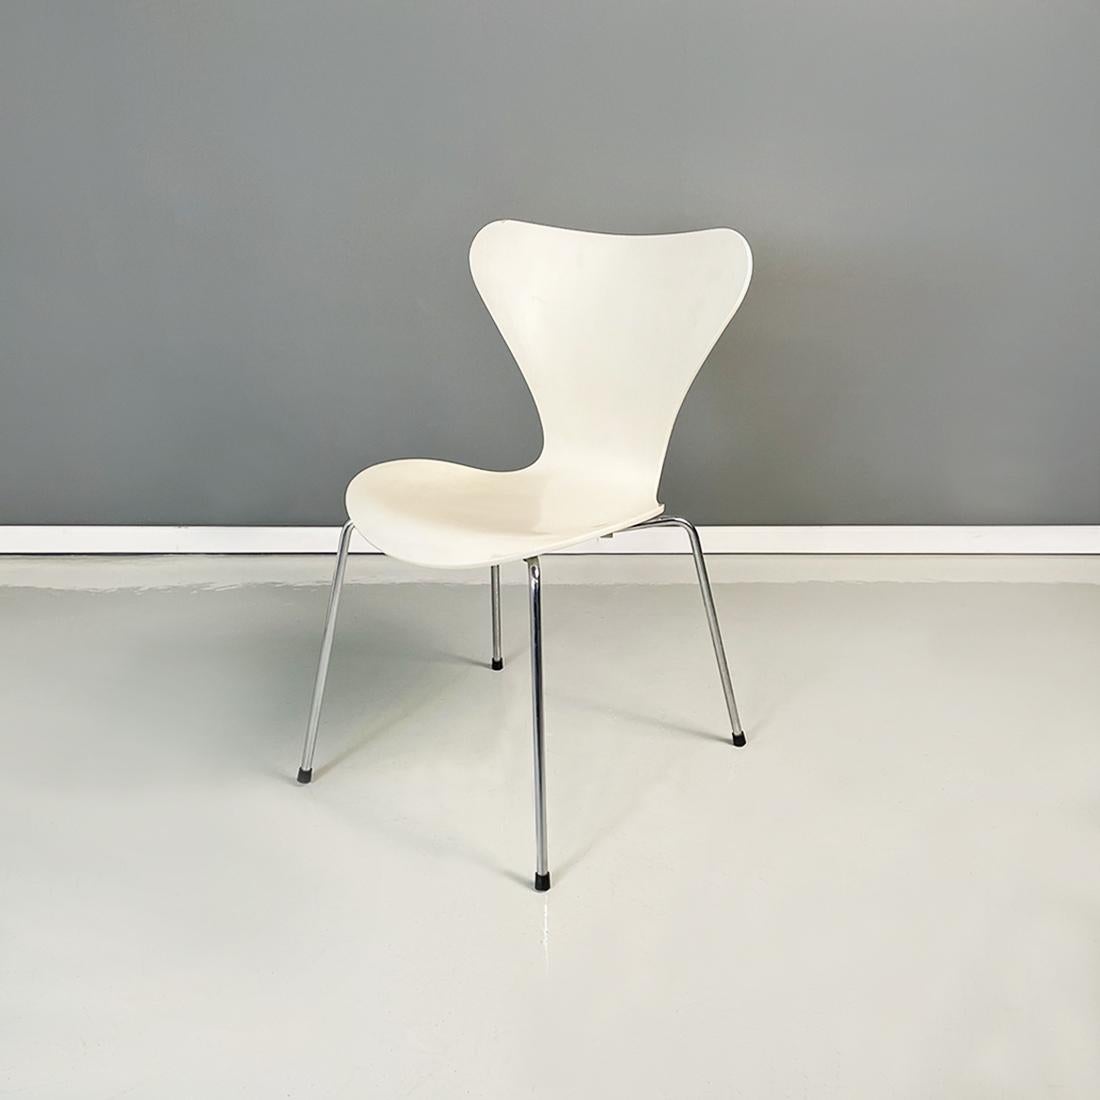 Danish Modern White Chairs of Series 7 by Arne Jacobsen for Fritz Hansen, 1970s For Sale 9